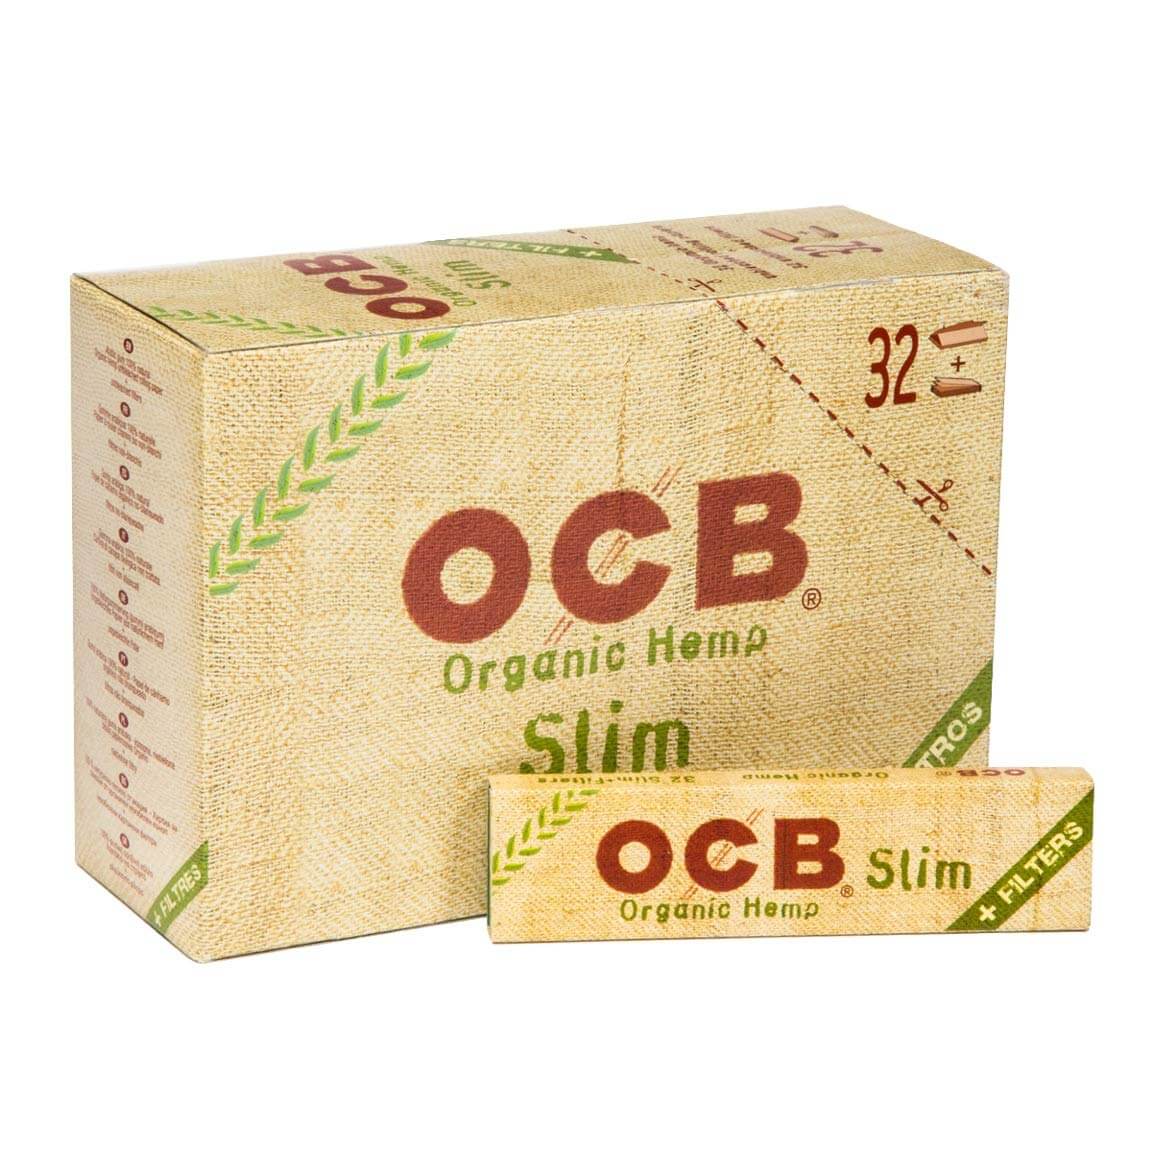 Wholesale OCB Organic Hemp Kingsize Rolling Papers + Filter Tips